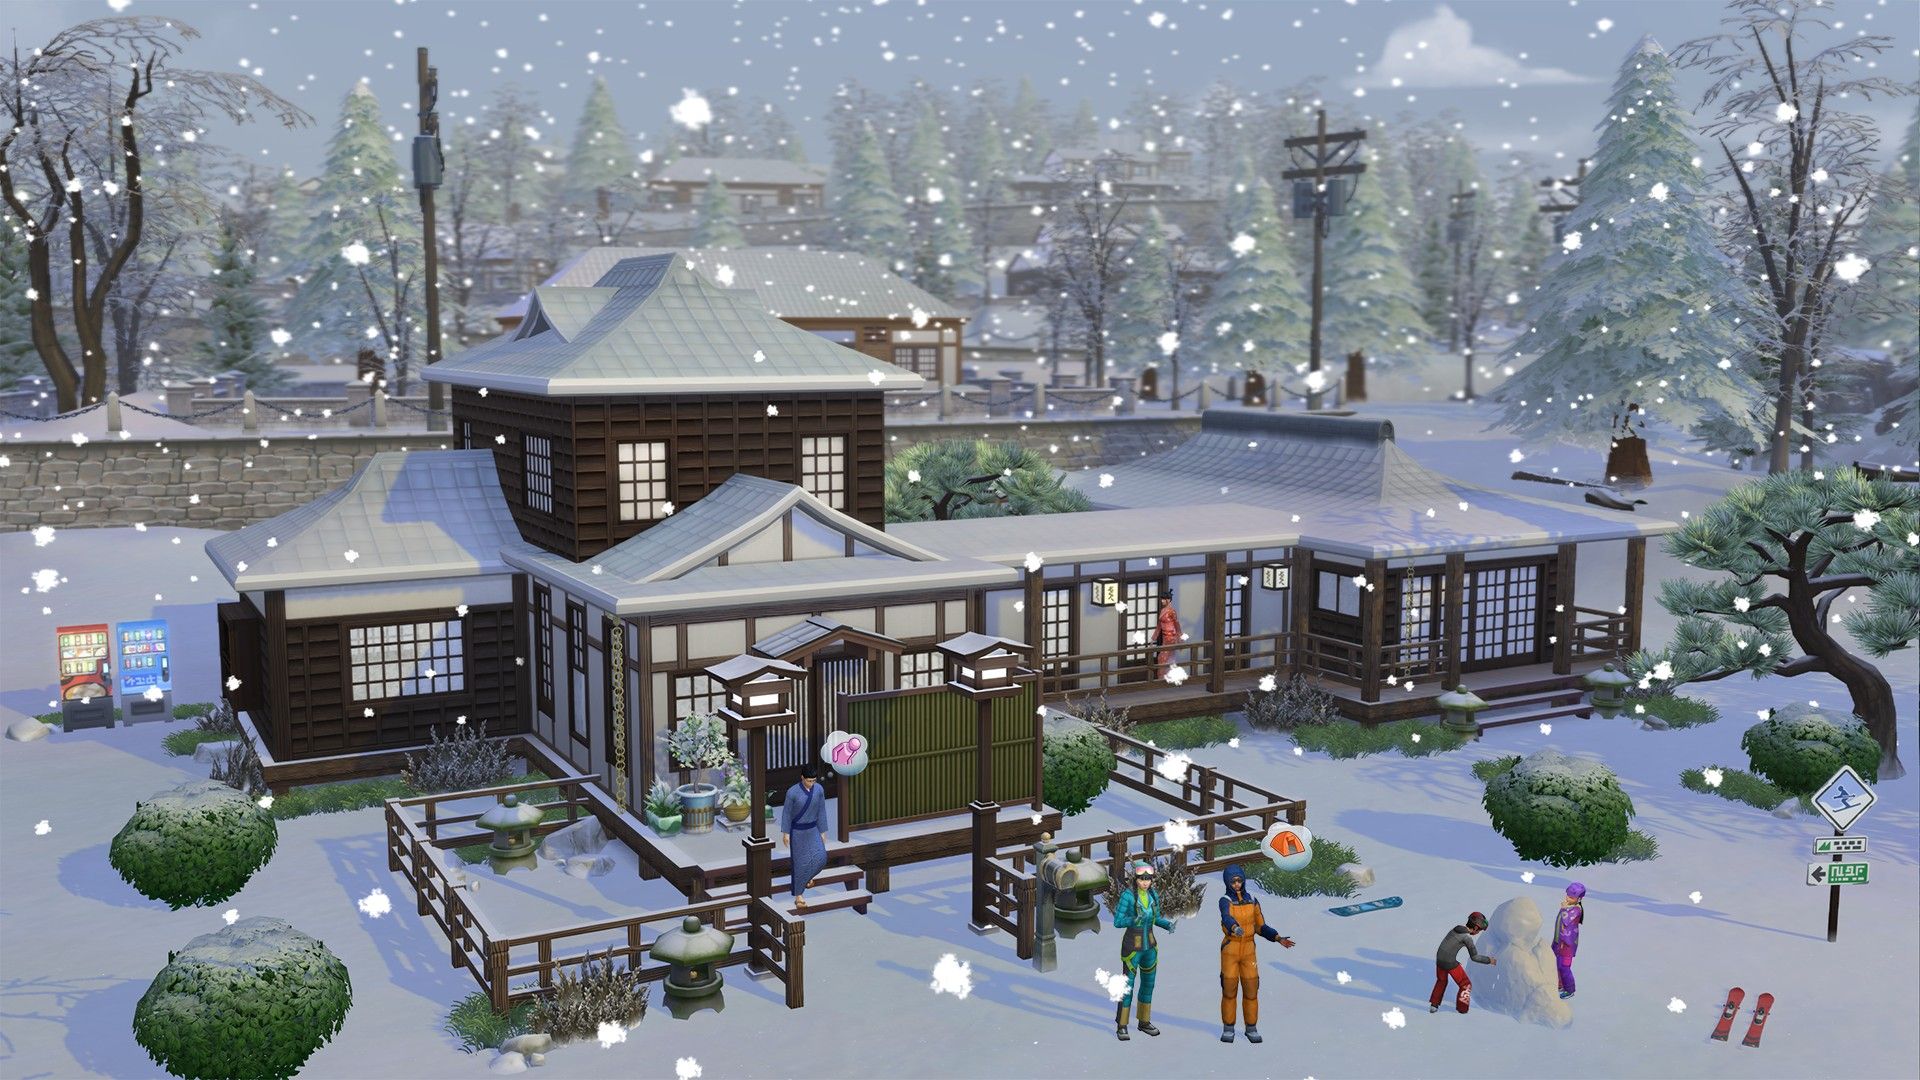 Lot in The Sims 4: Snowy Escape